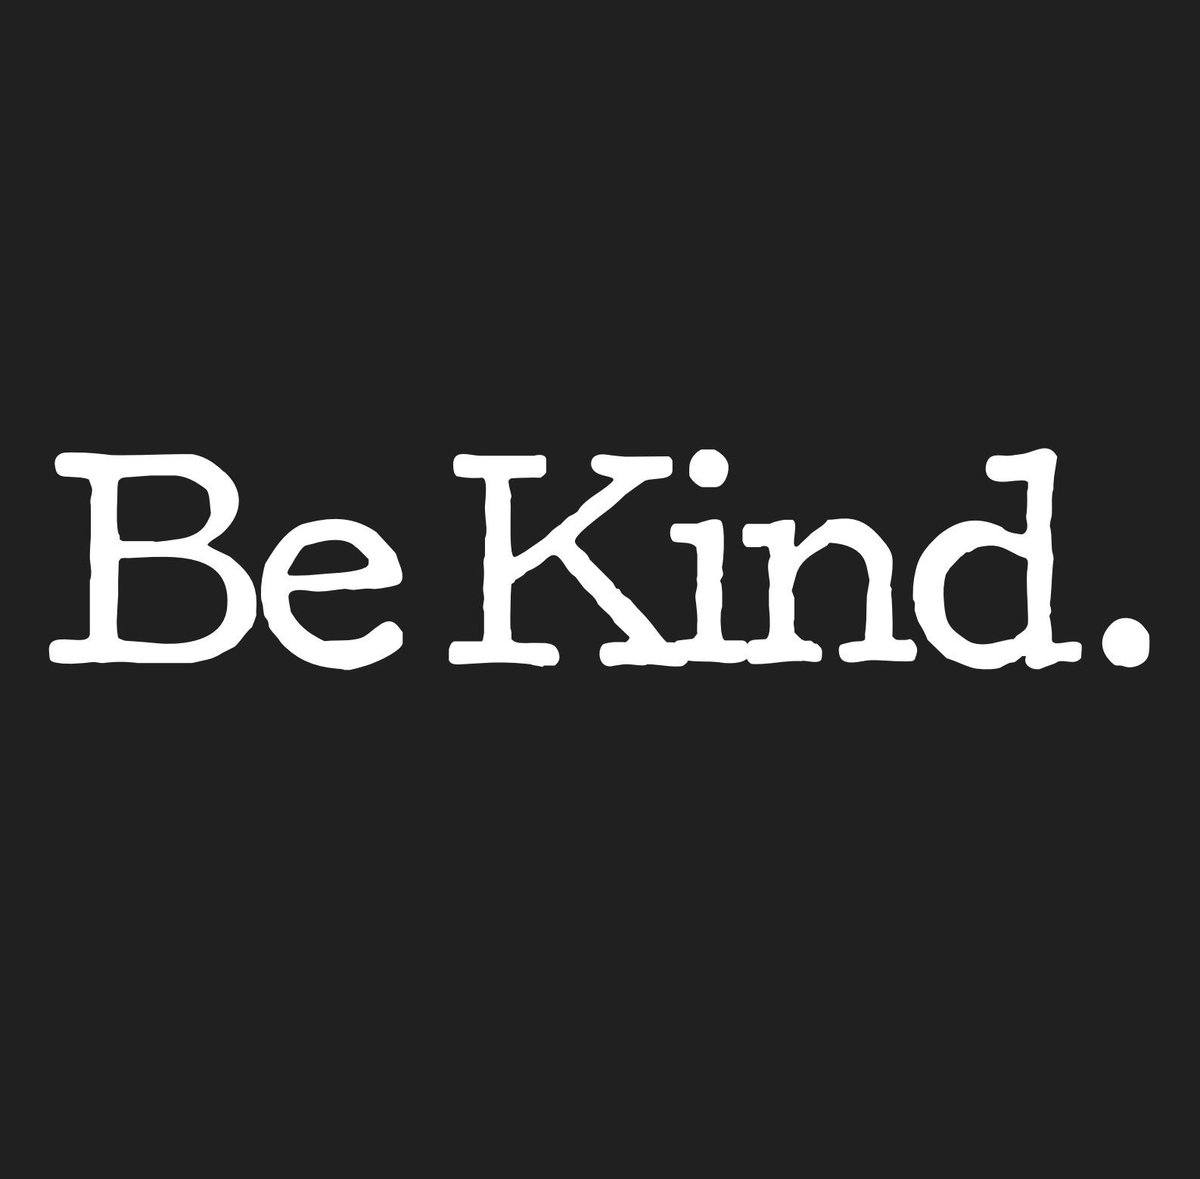 Please read this very important message:
#BeKind #WorldMentalHealthDay #depression #Anxiety #MentalHealth #ChronicPain